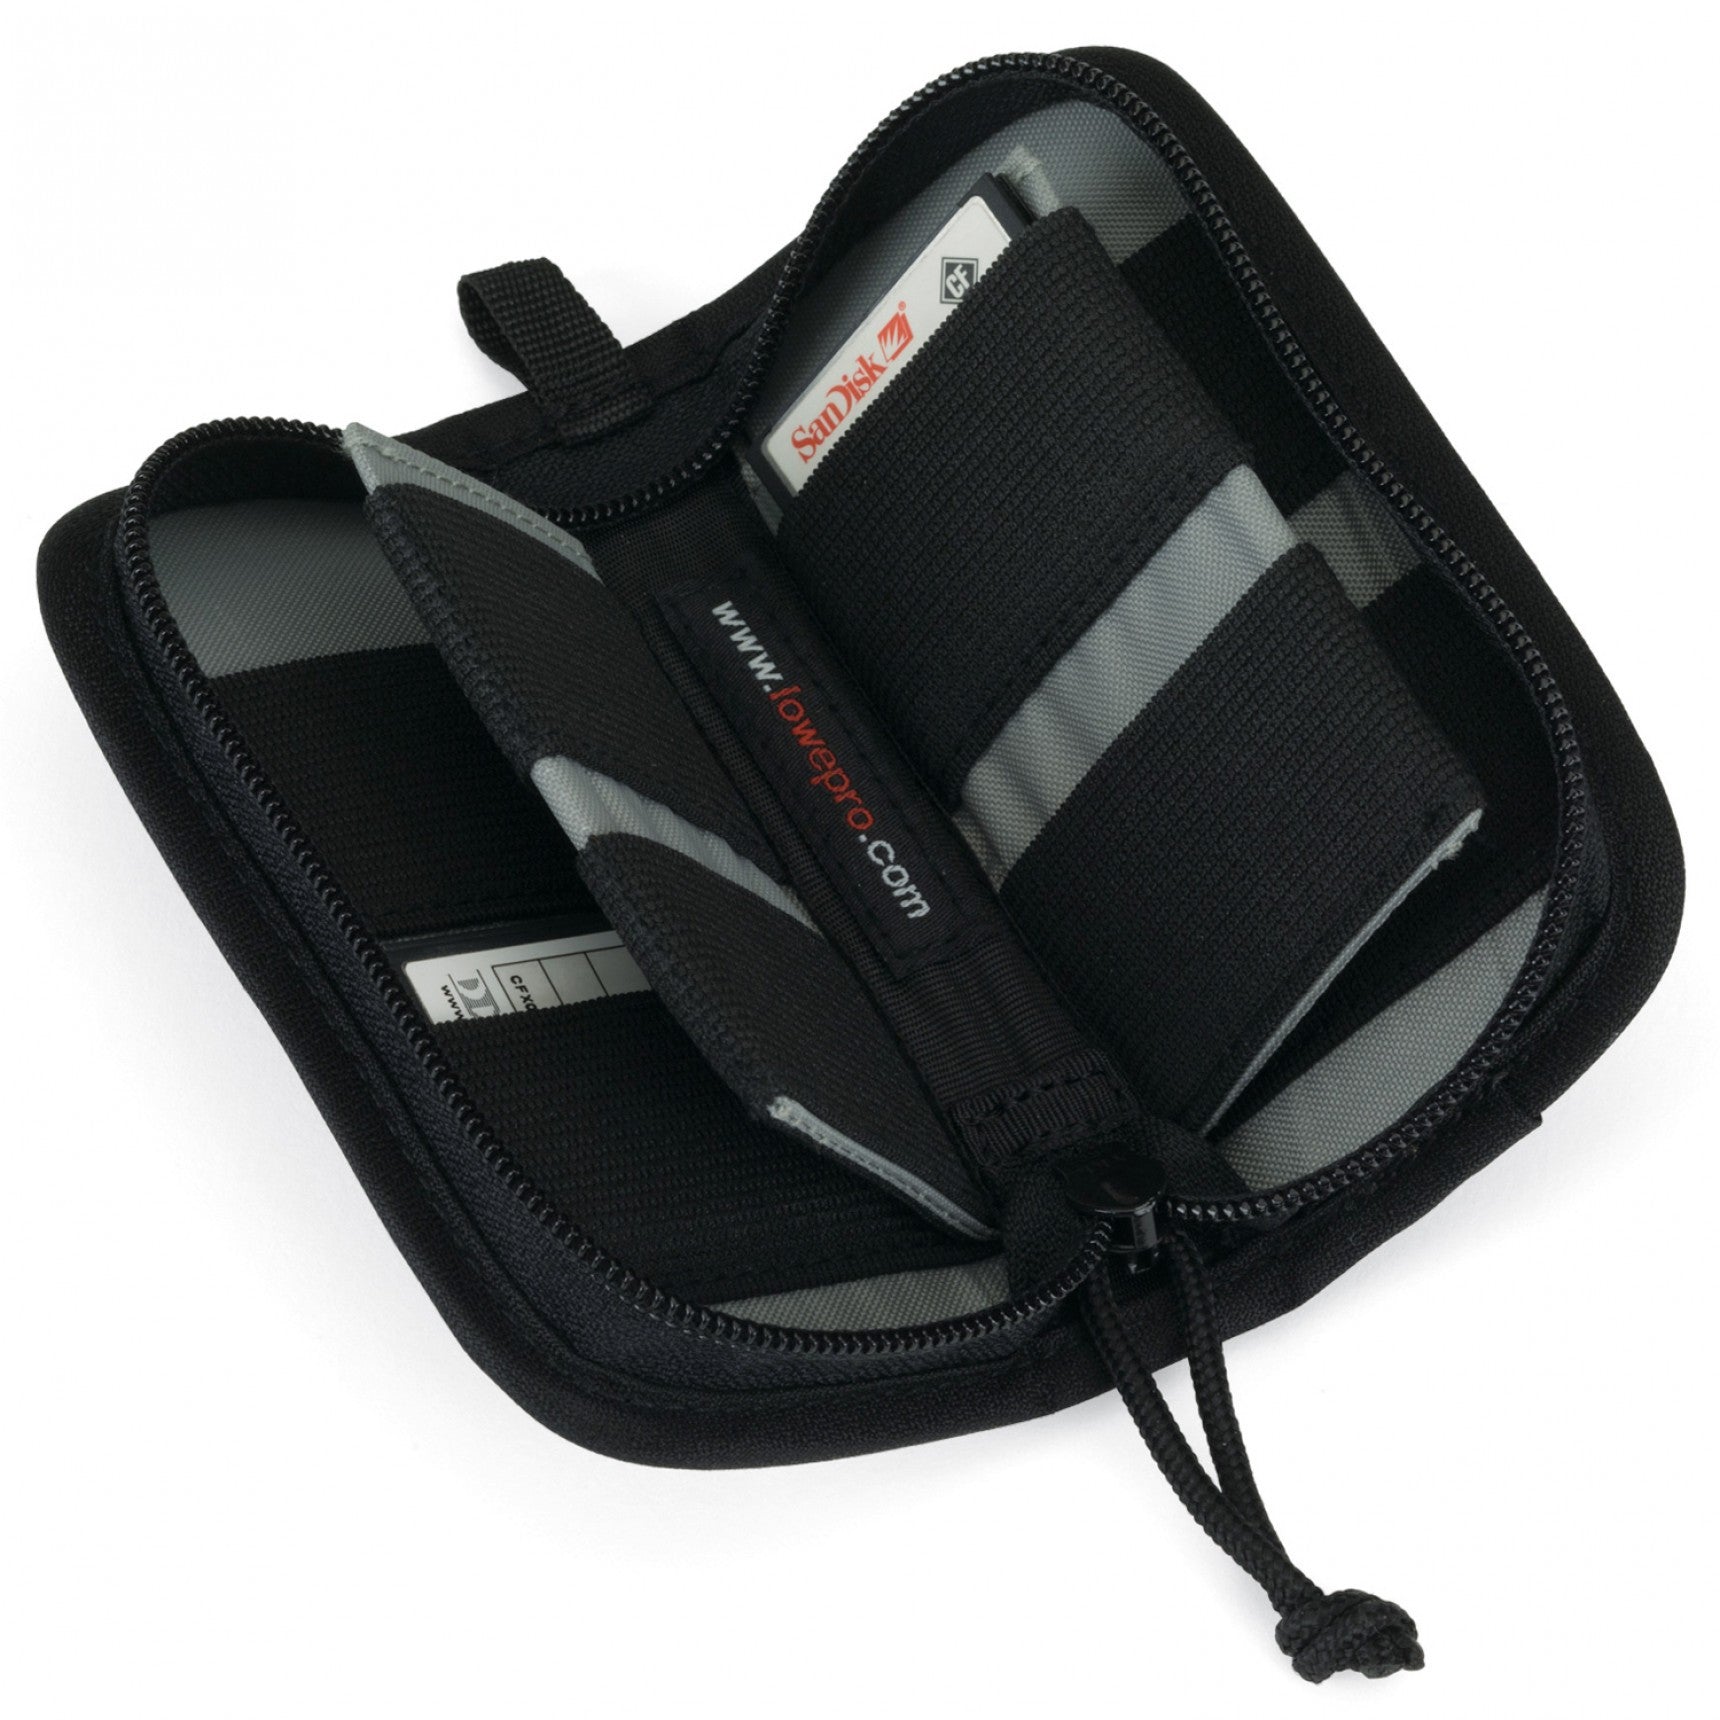 Lowepro S&F Memory Wallet 20 (Black), bags accessories, Lowepro - Pictureline  - 1